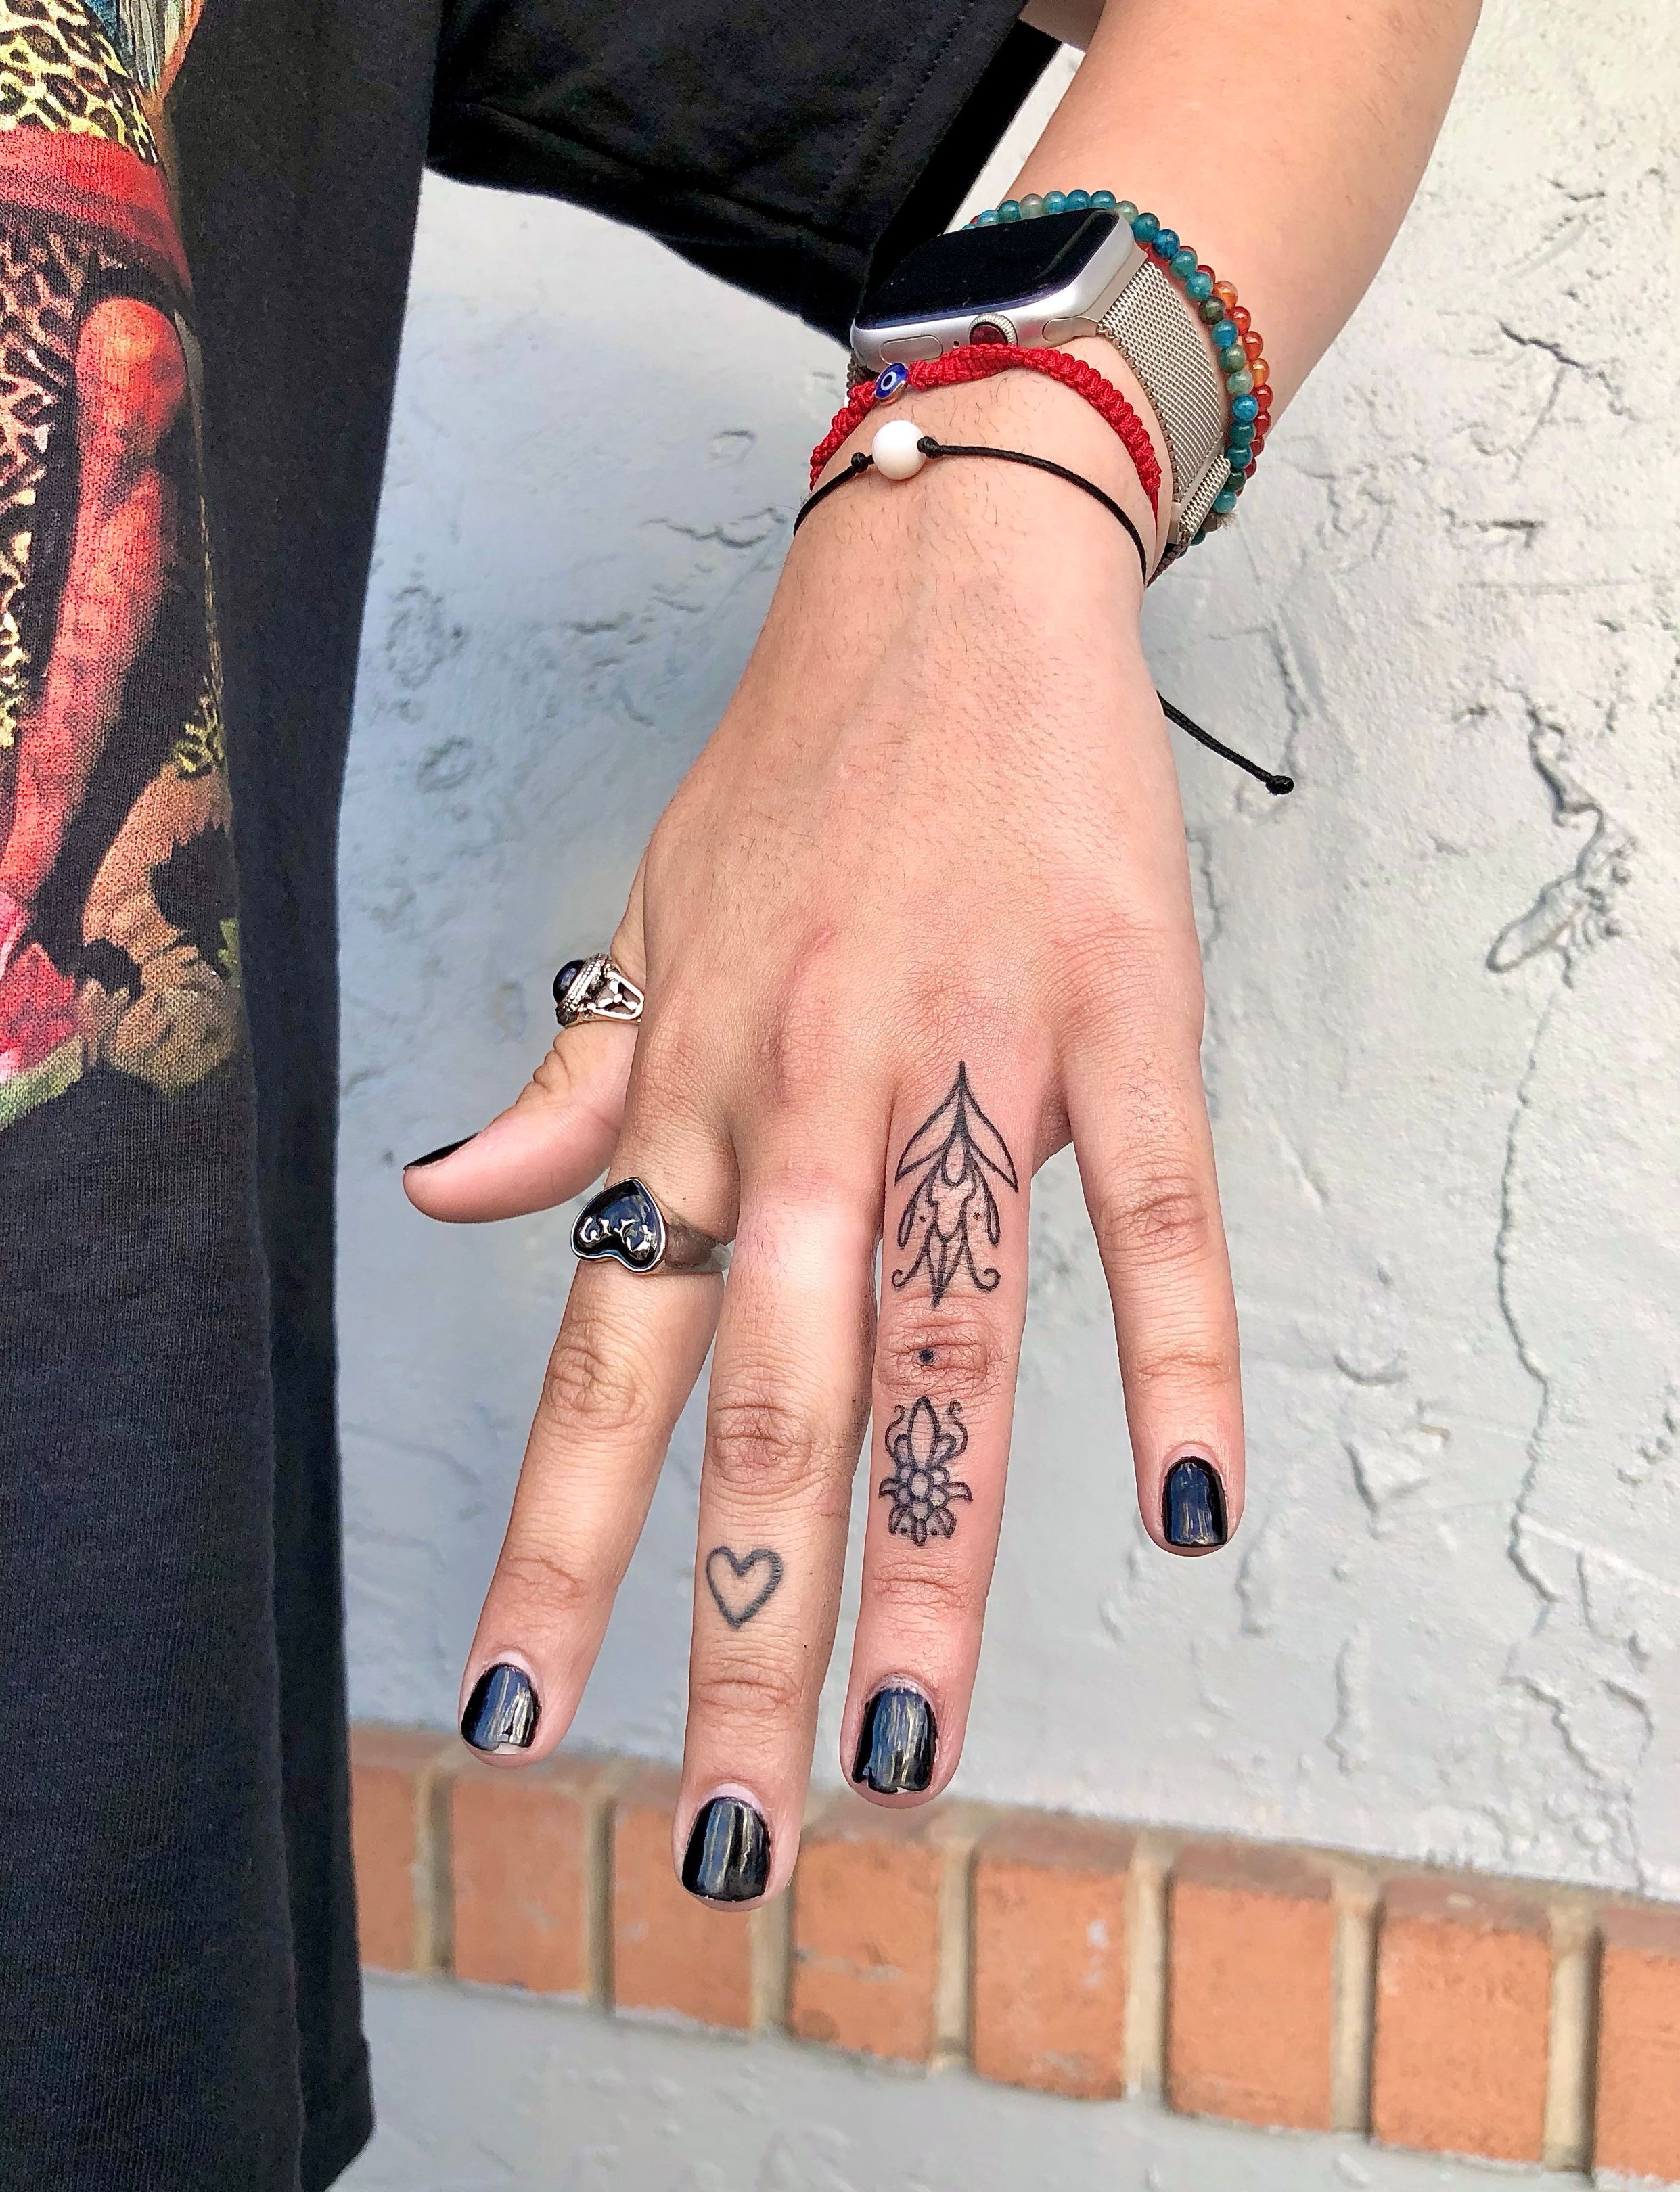 2 little finger tattoos : r/sticknpokes